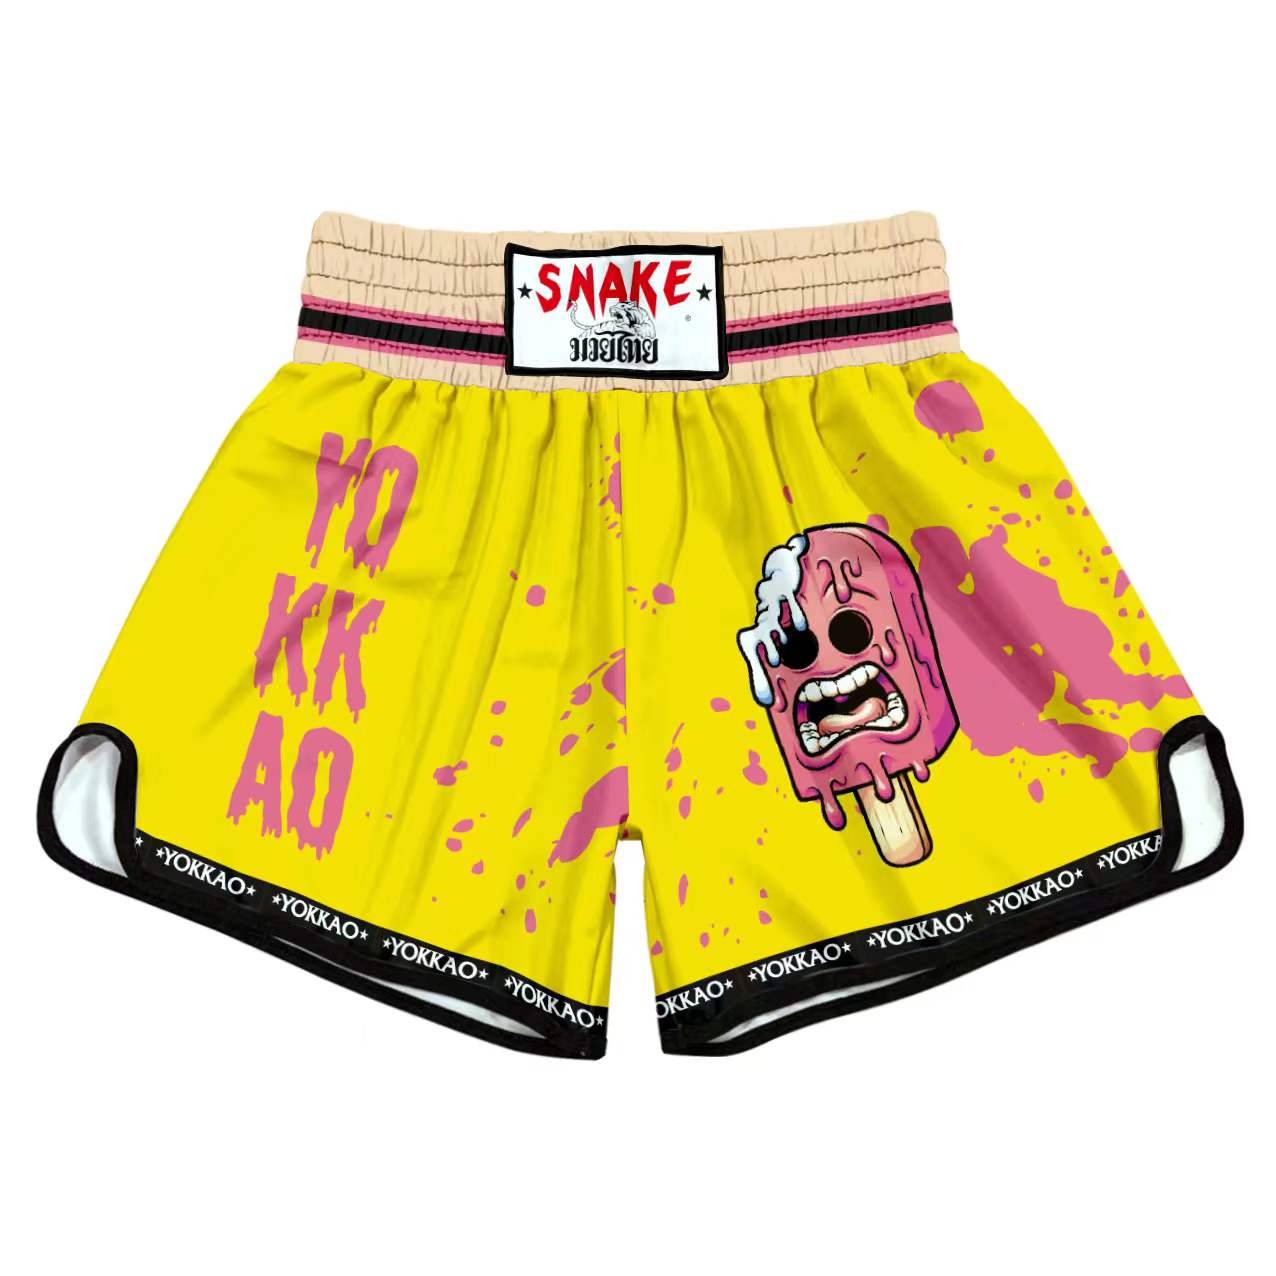 Boxing Shorts for Women Training Fighting Muay Thai Shorts Boxing MMA BJJ  Short Kickboxing Trunks Clothing